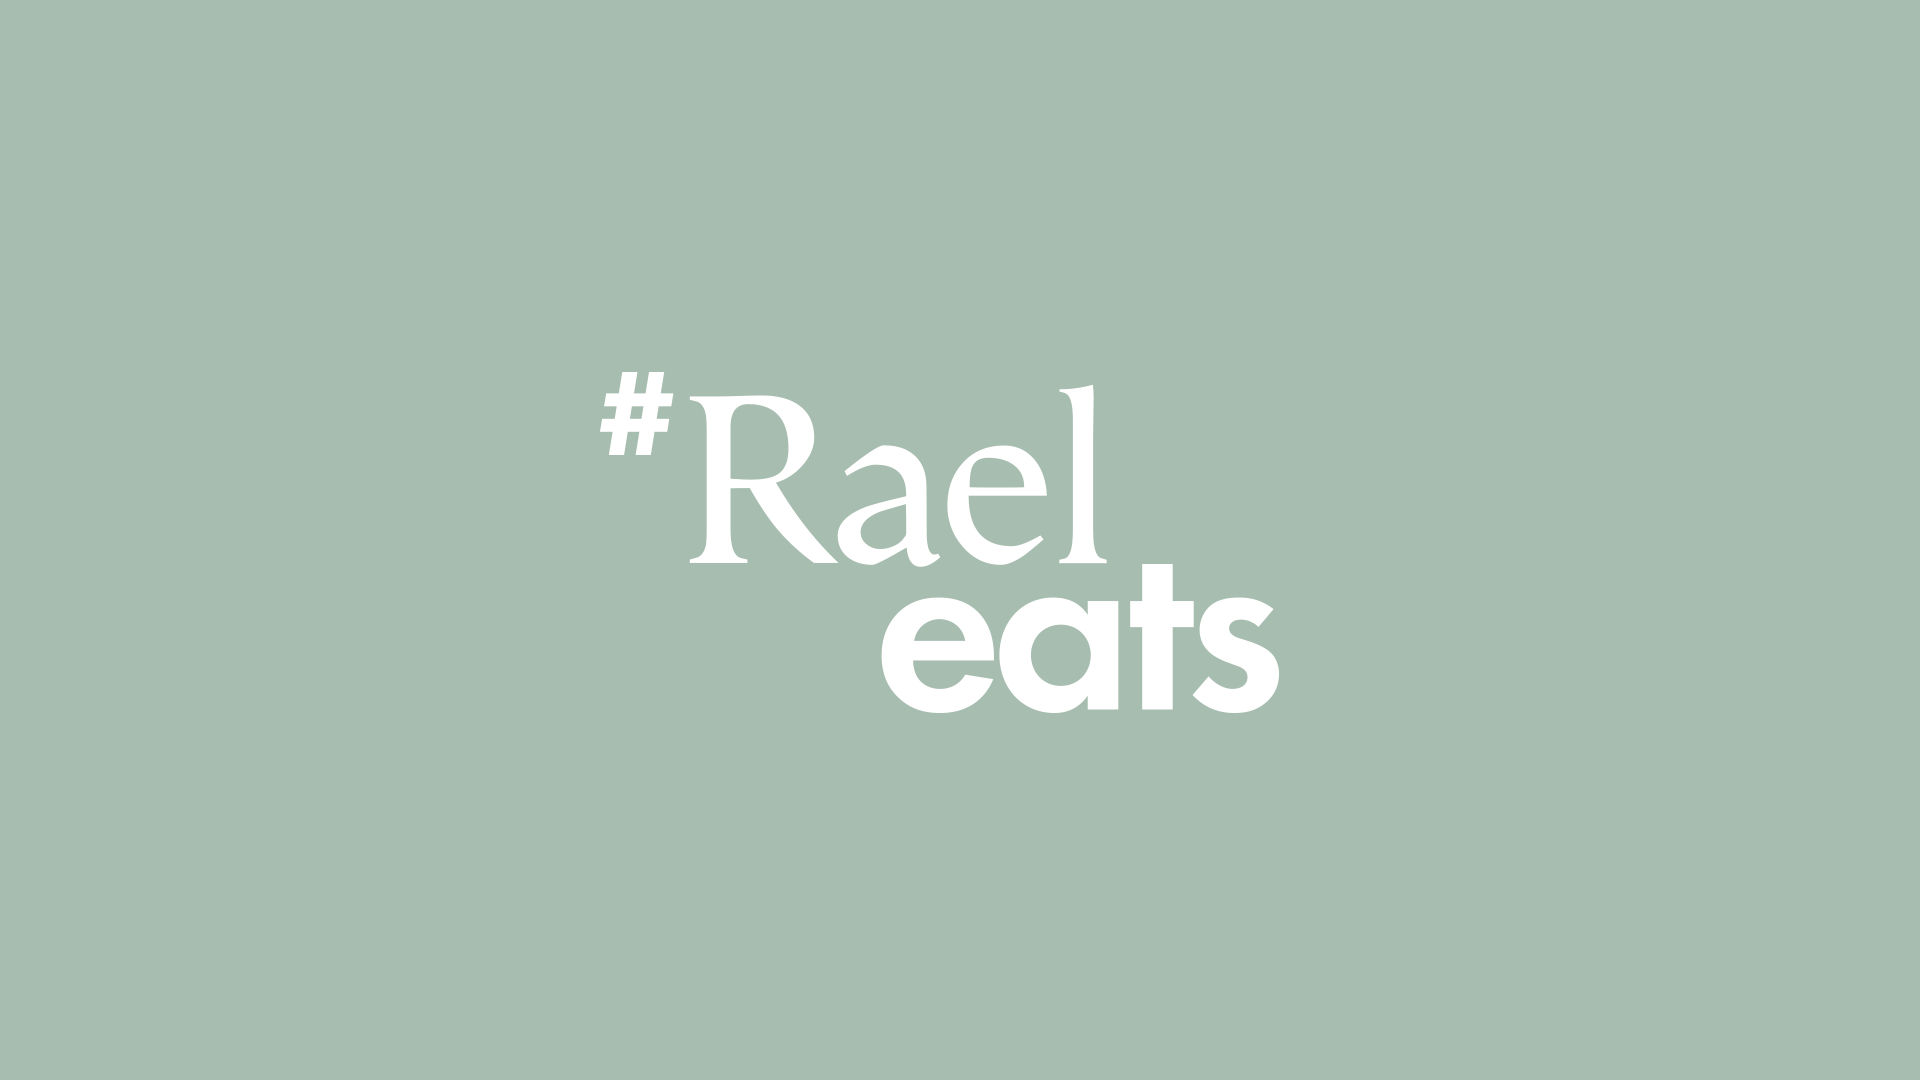 Introducing: #RaelEats